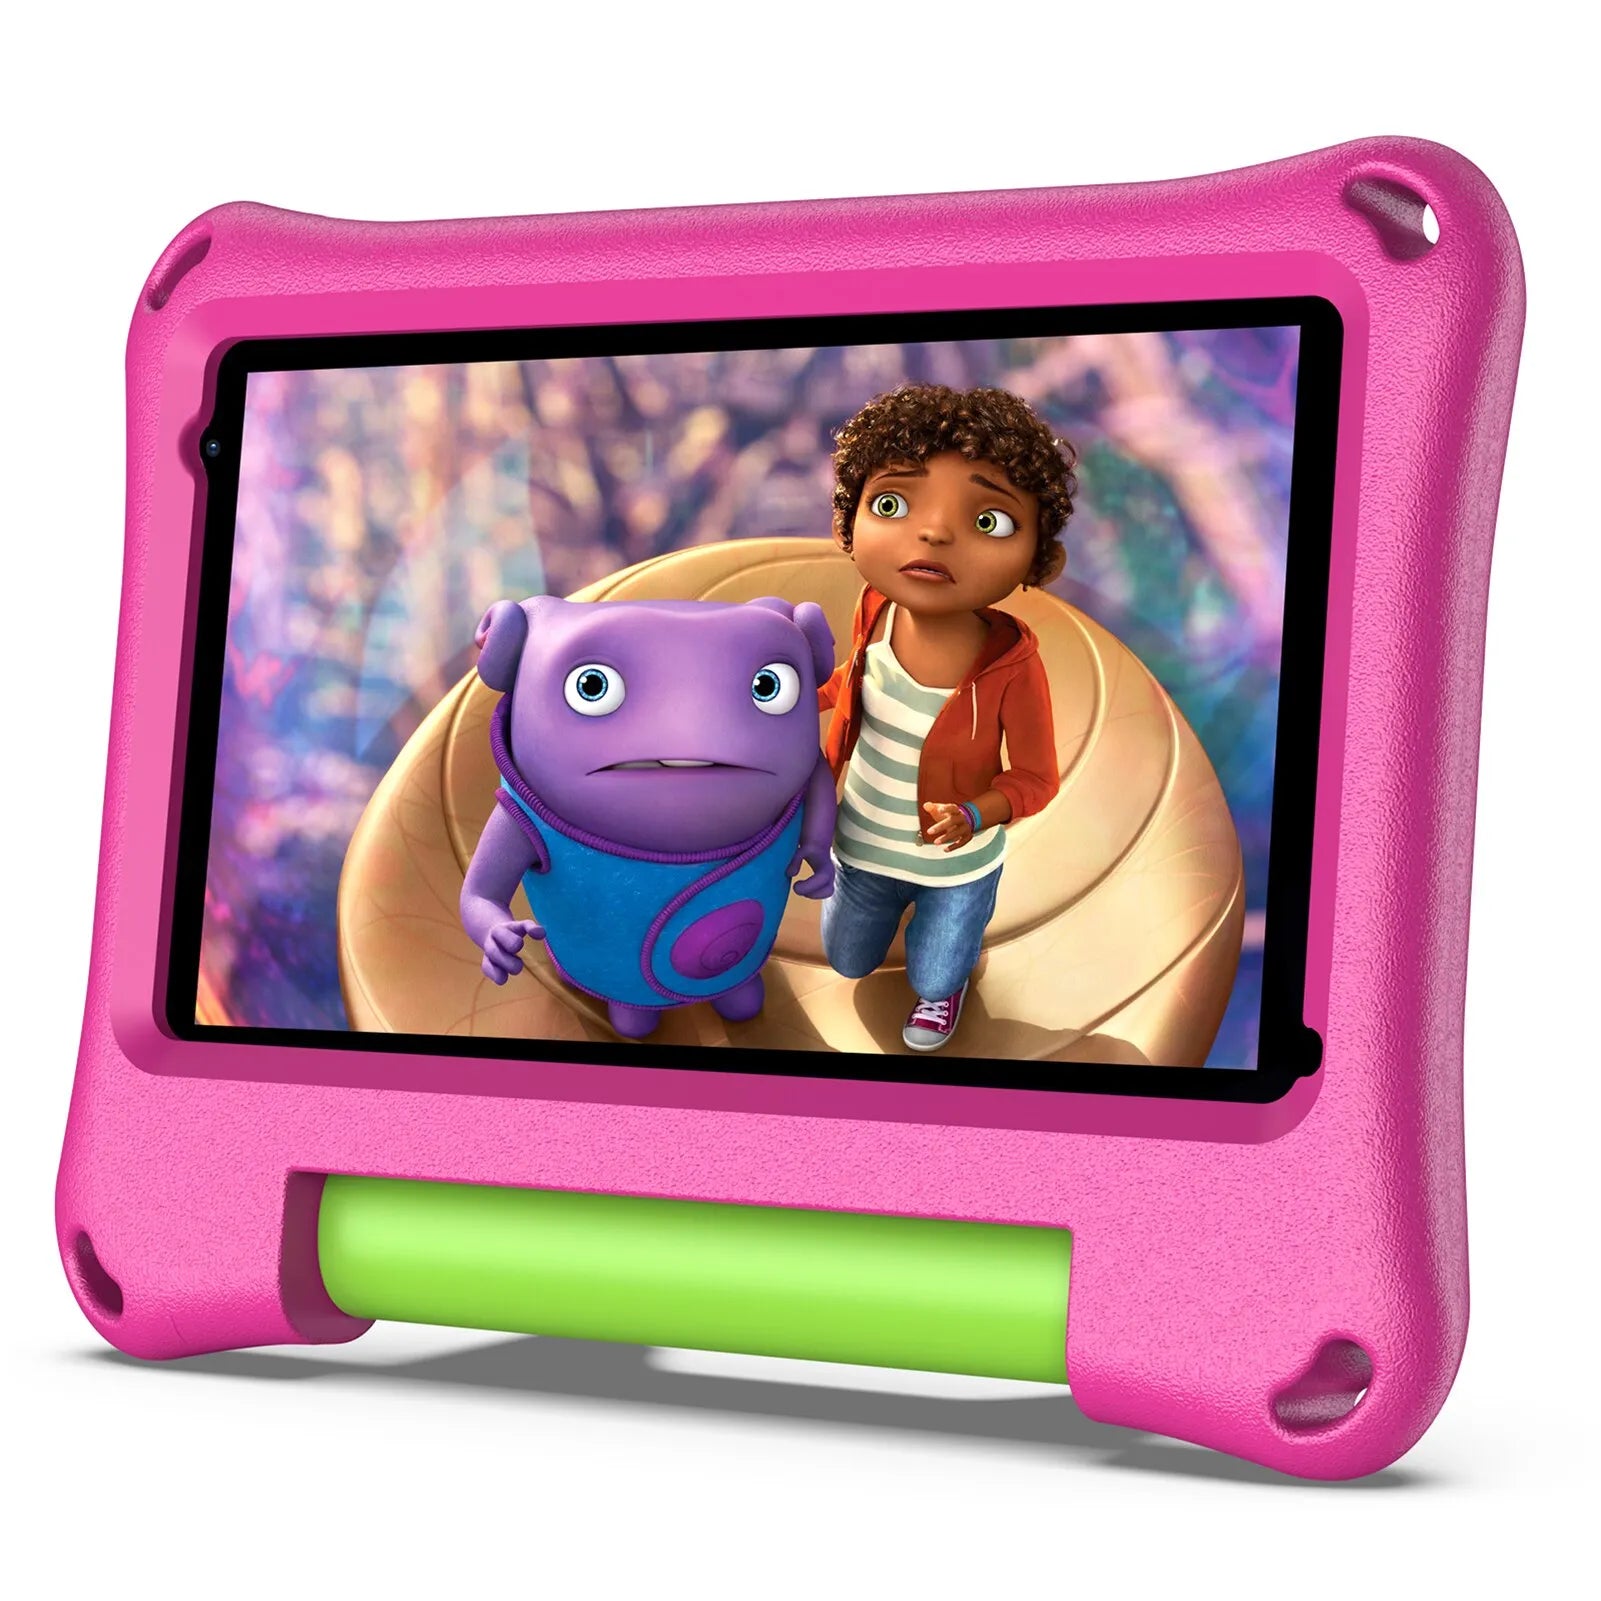 VASOUN Kids Tablet 7 Inch - Android 11, 2GB RAM, 32GB Storage, WiFi, Dual Camera, Parental Control, Google Playstore European regulations / Pink